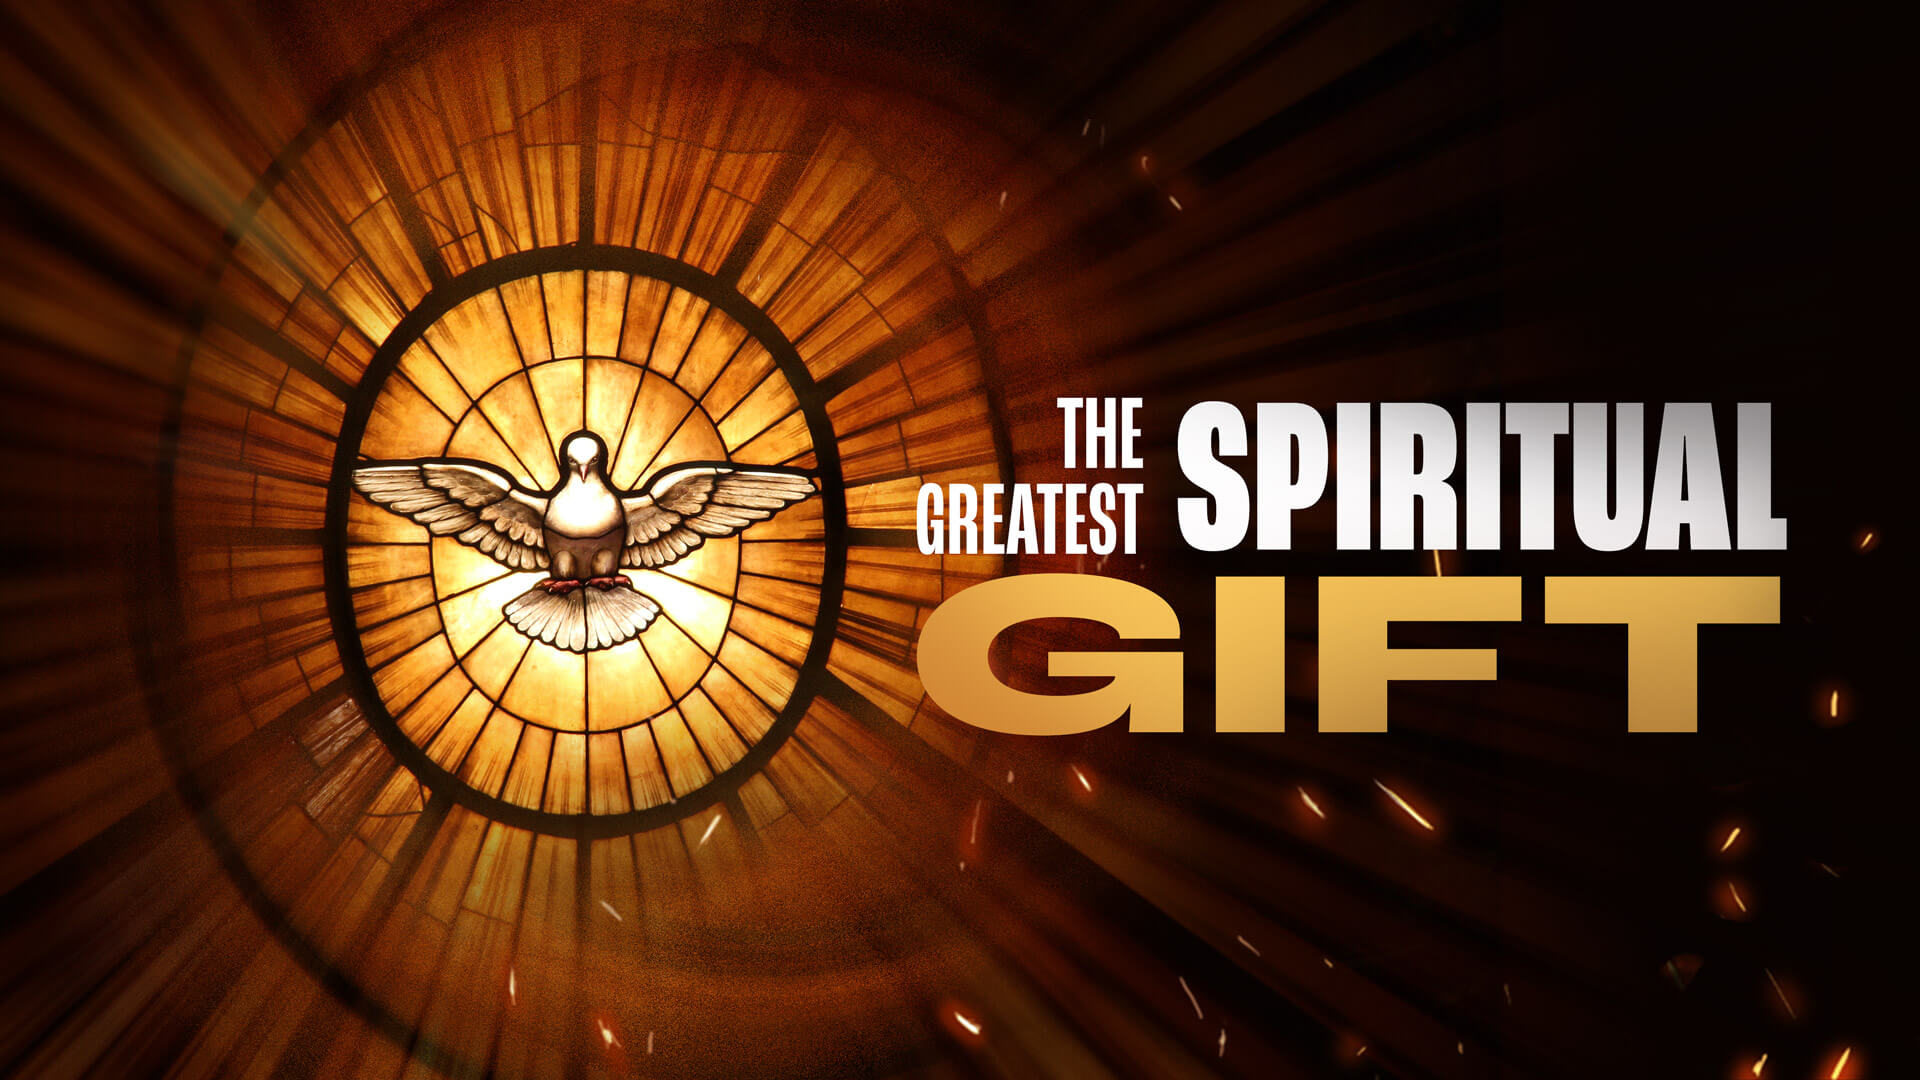 The Greatest Spiritual Gift